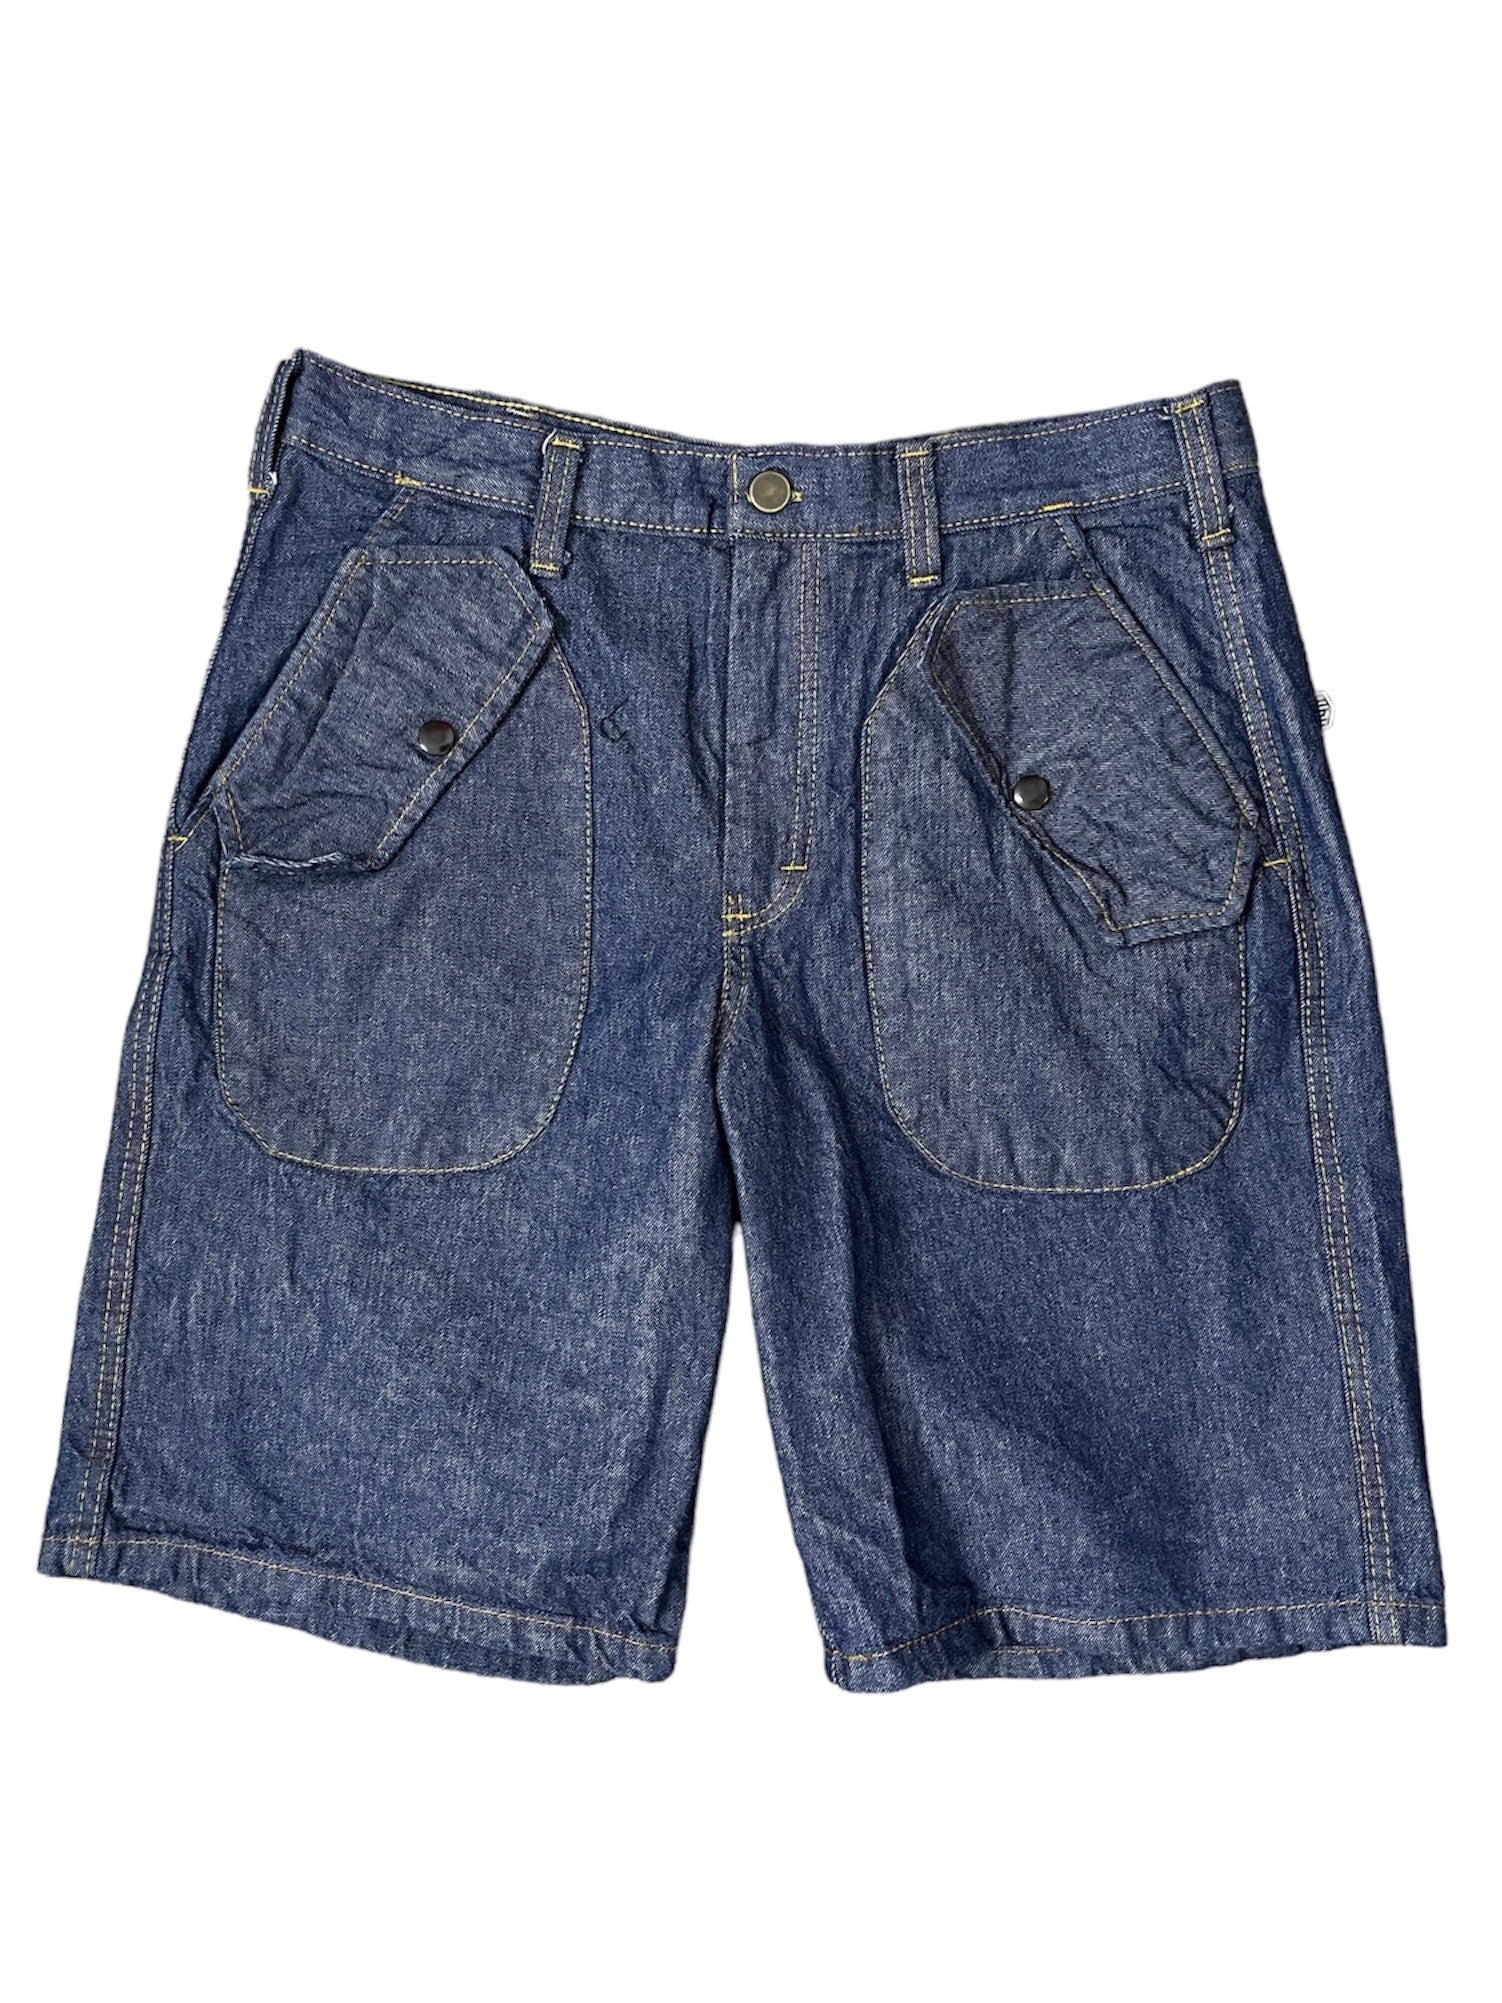 Double pocket shorts